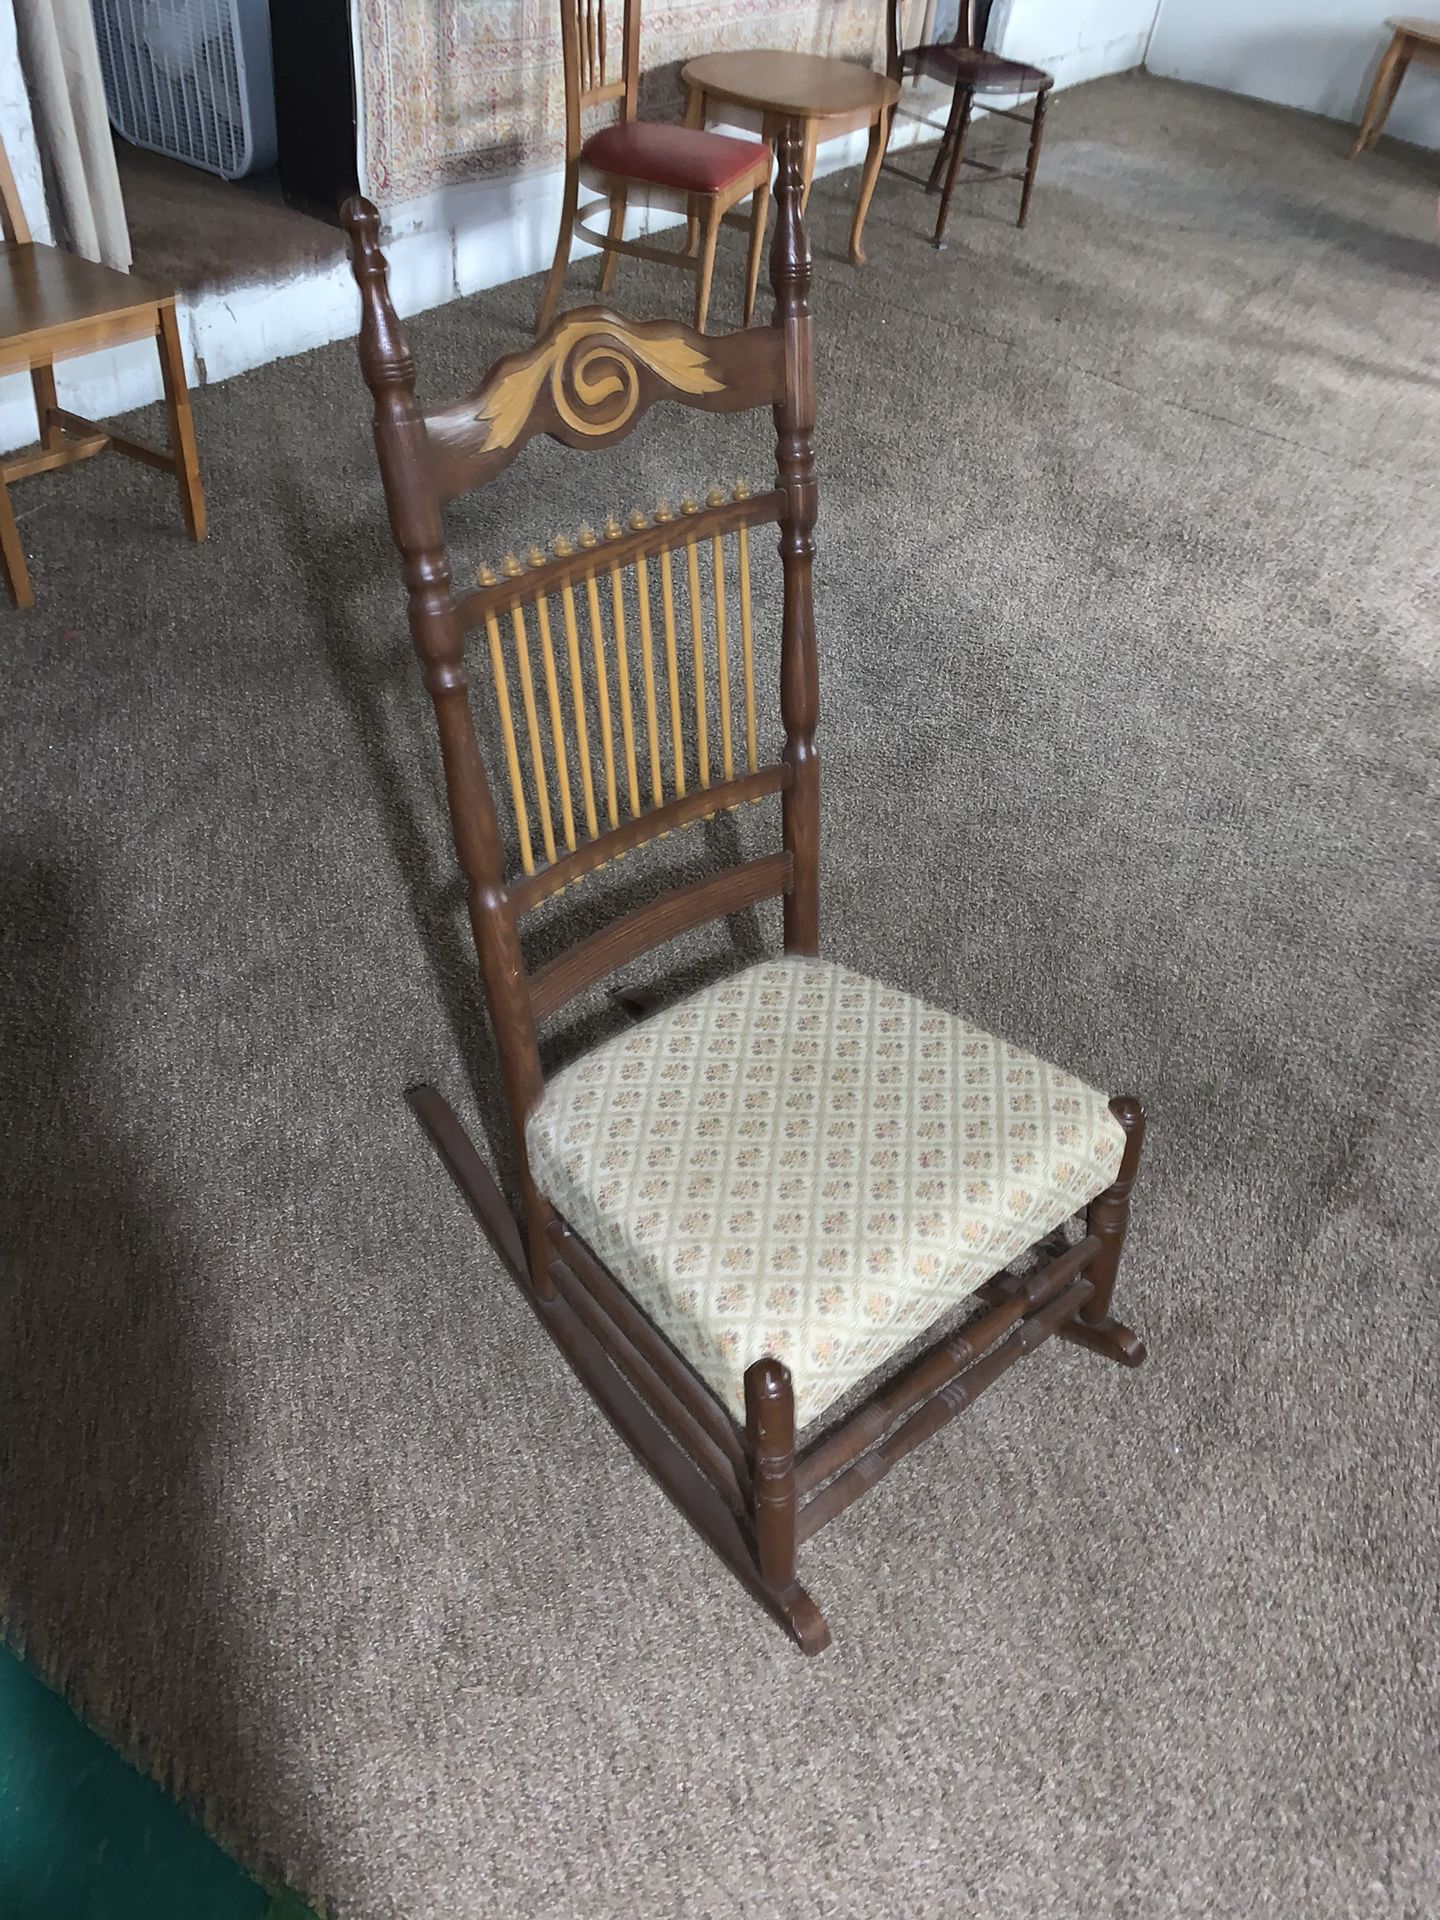 Rocking Chair, Nursery Chair 